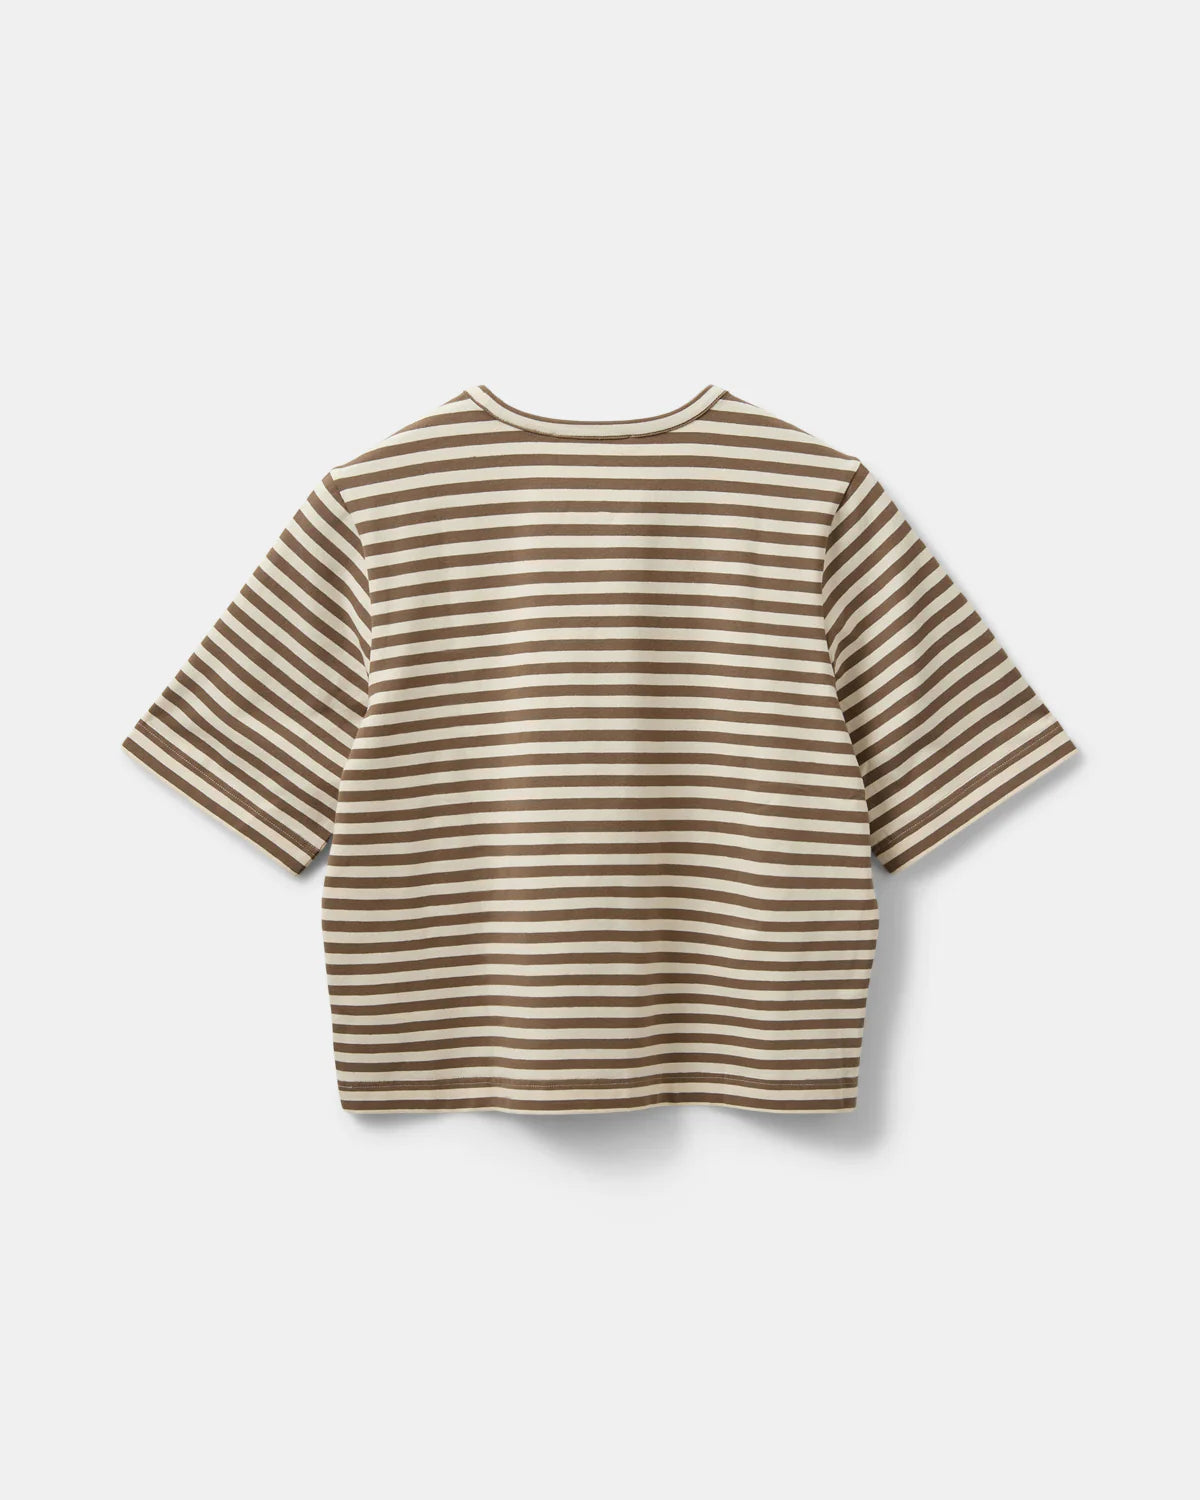 Sofie Schnoor T-shirt Light Brown Striped